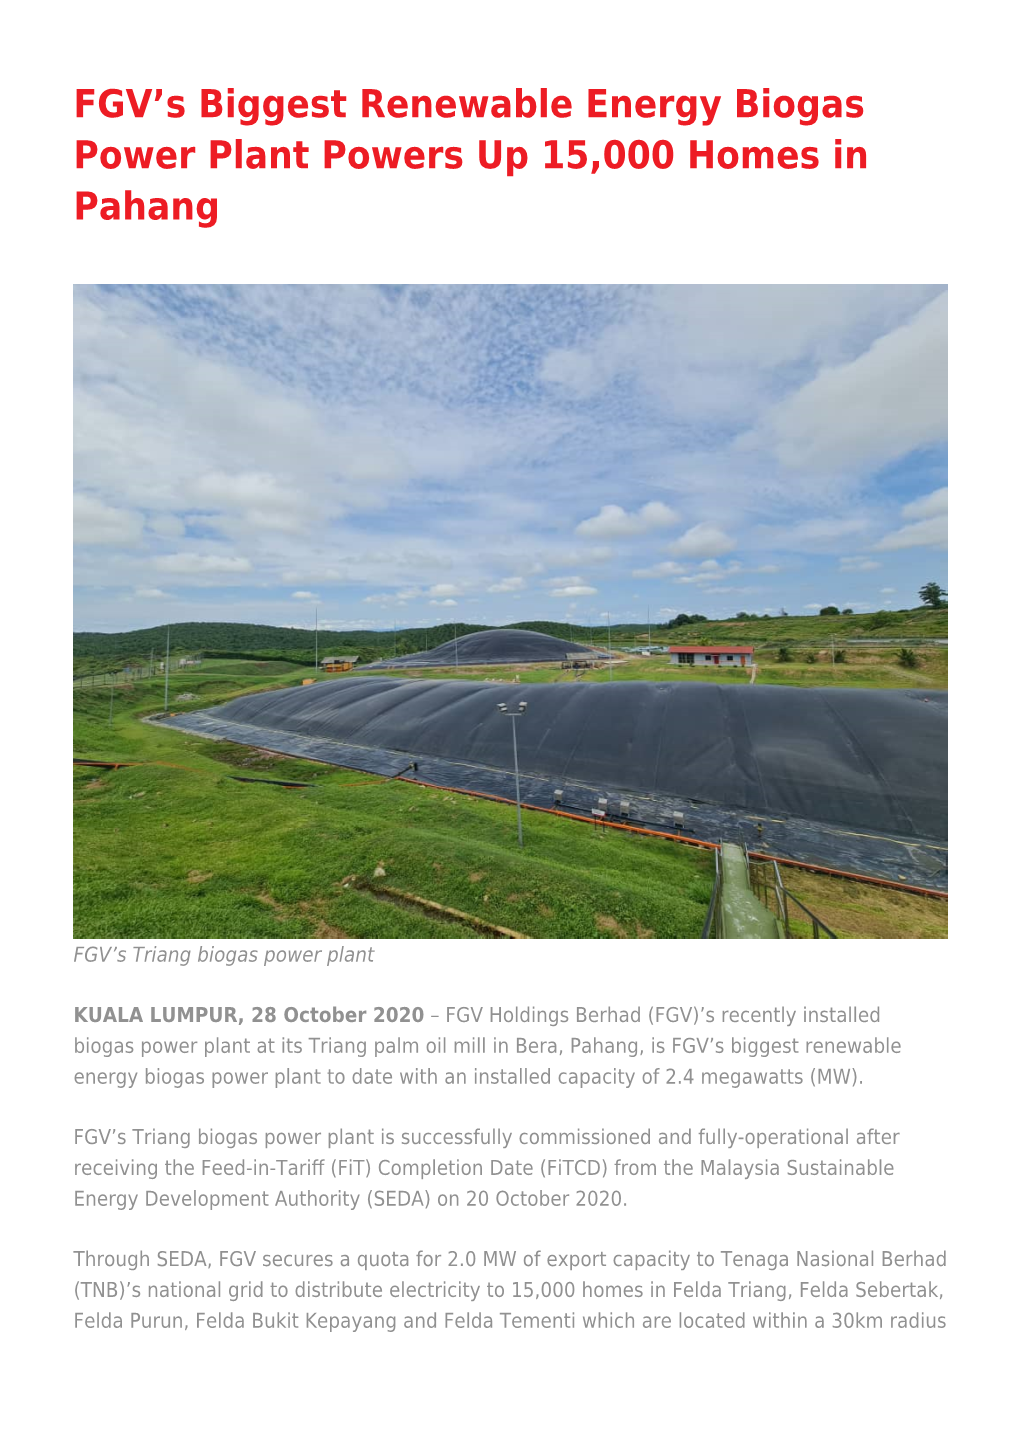 FGV's Biggest Renewable Energy Biogas Power Plant Powers Up